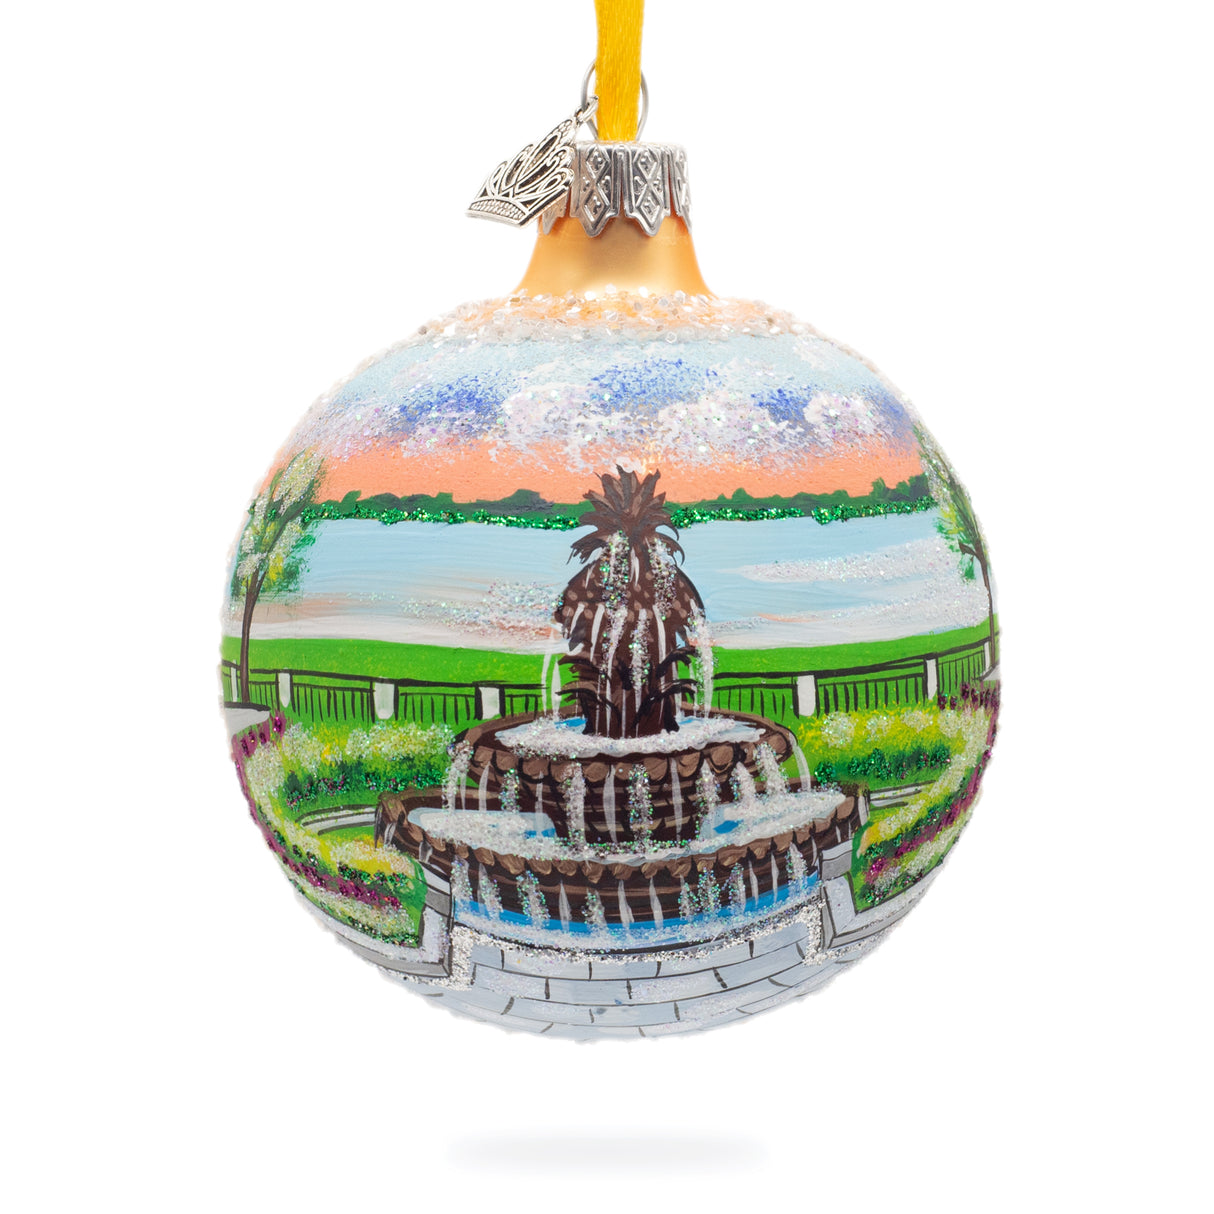 Joe Riley Waterfront Park, Charleston, South Carolina, USA Glass Ball Christmas Ornament 3.25 Inches in Multi color, Round shape